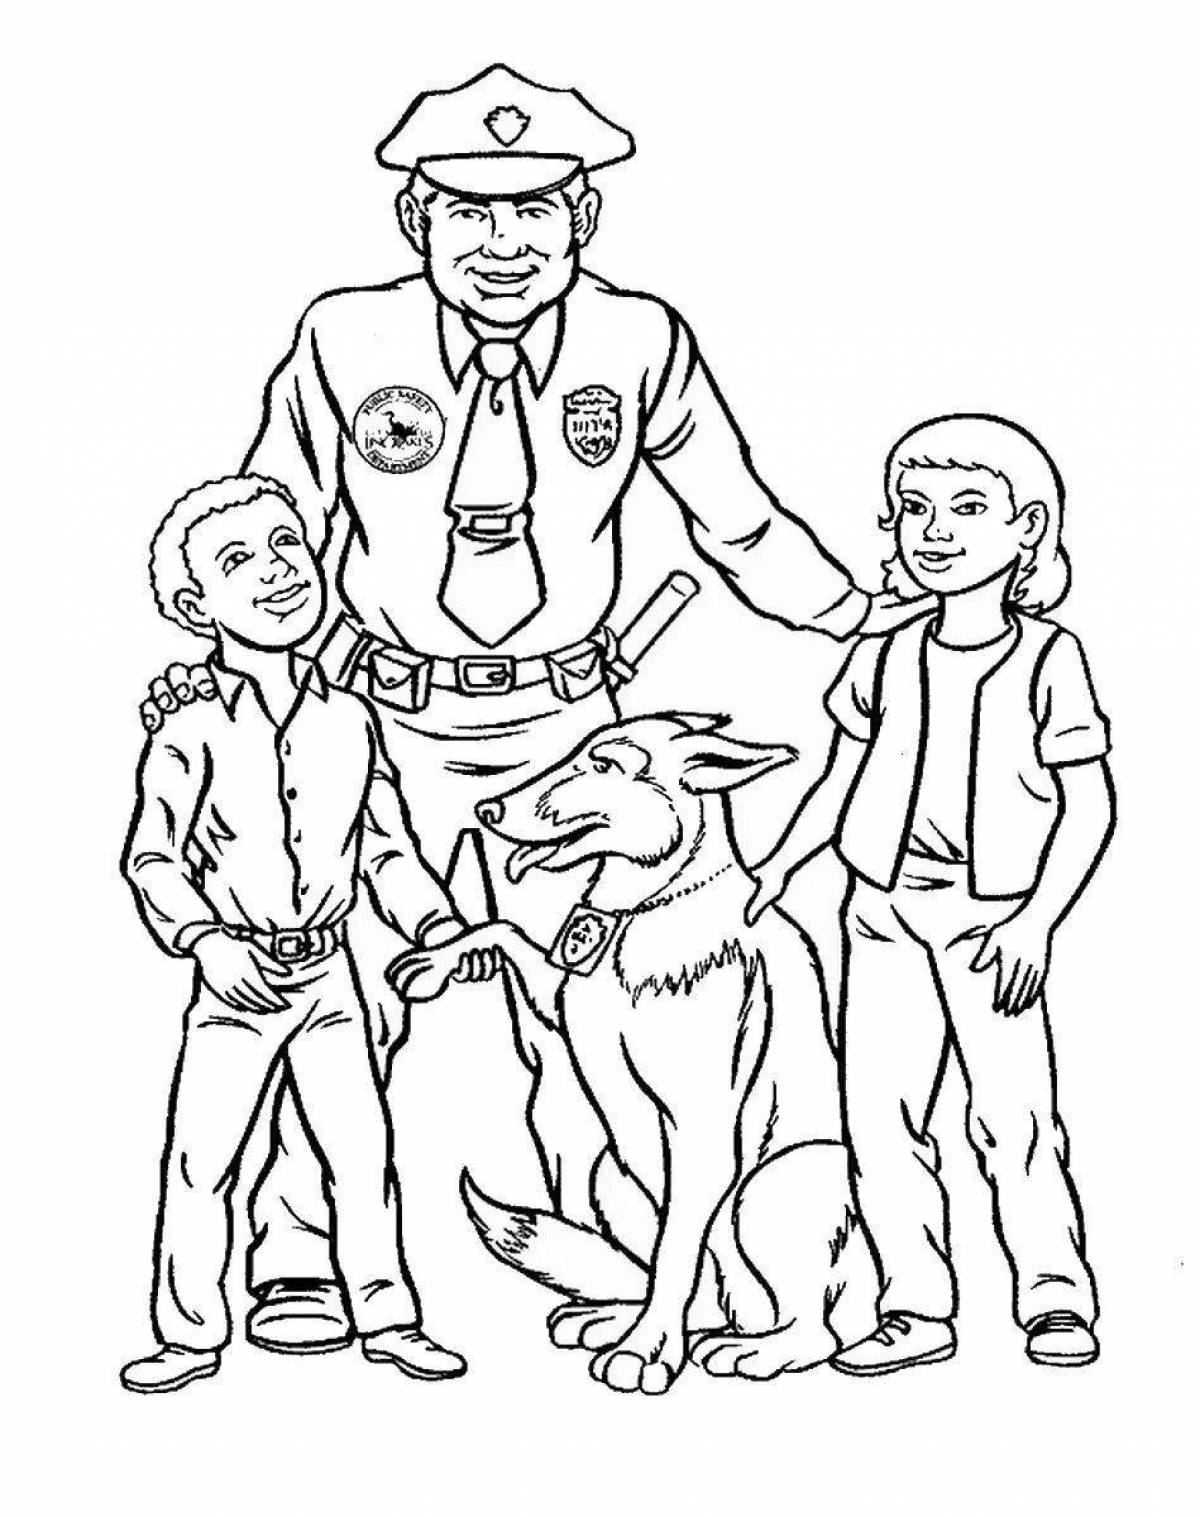 Joyful cop coloring for kids